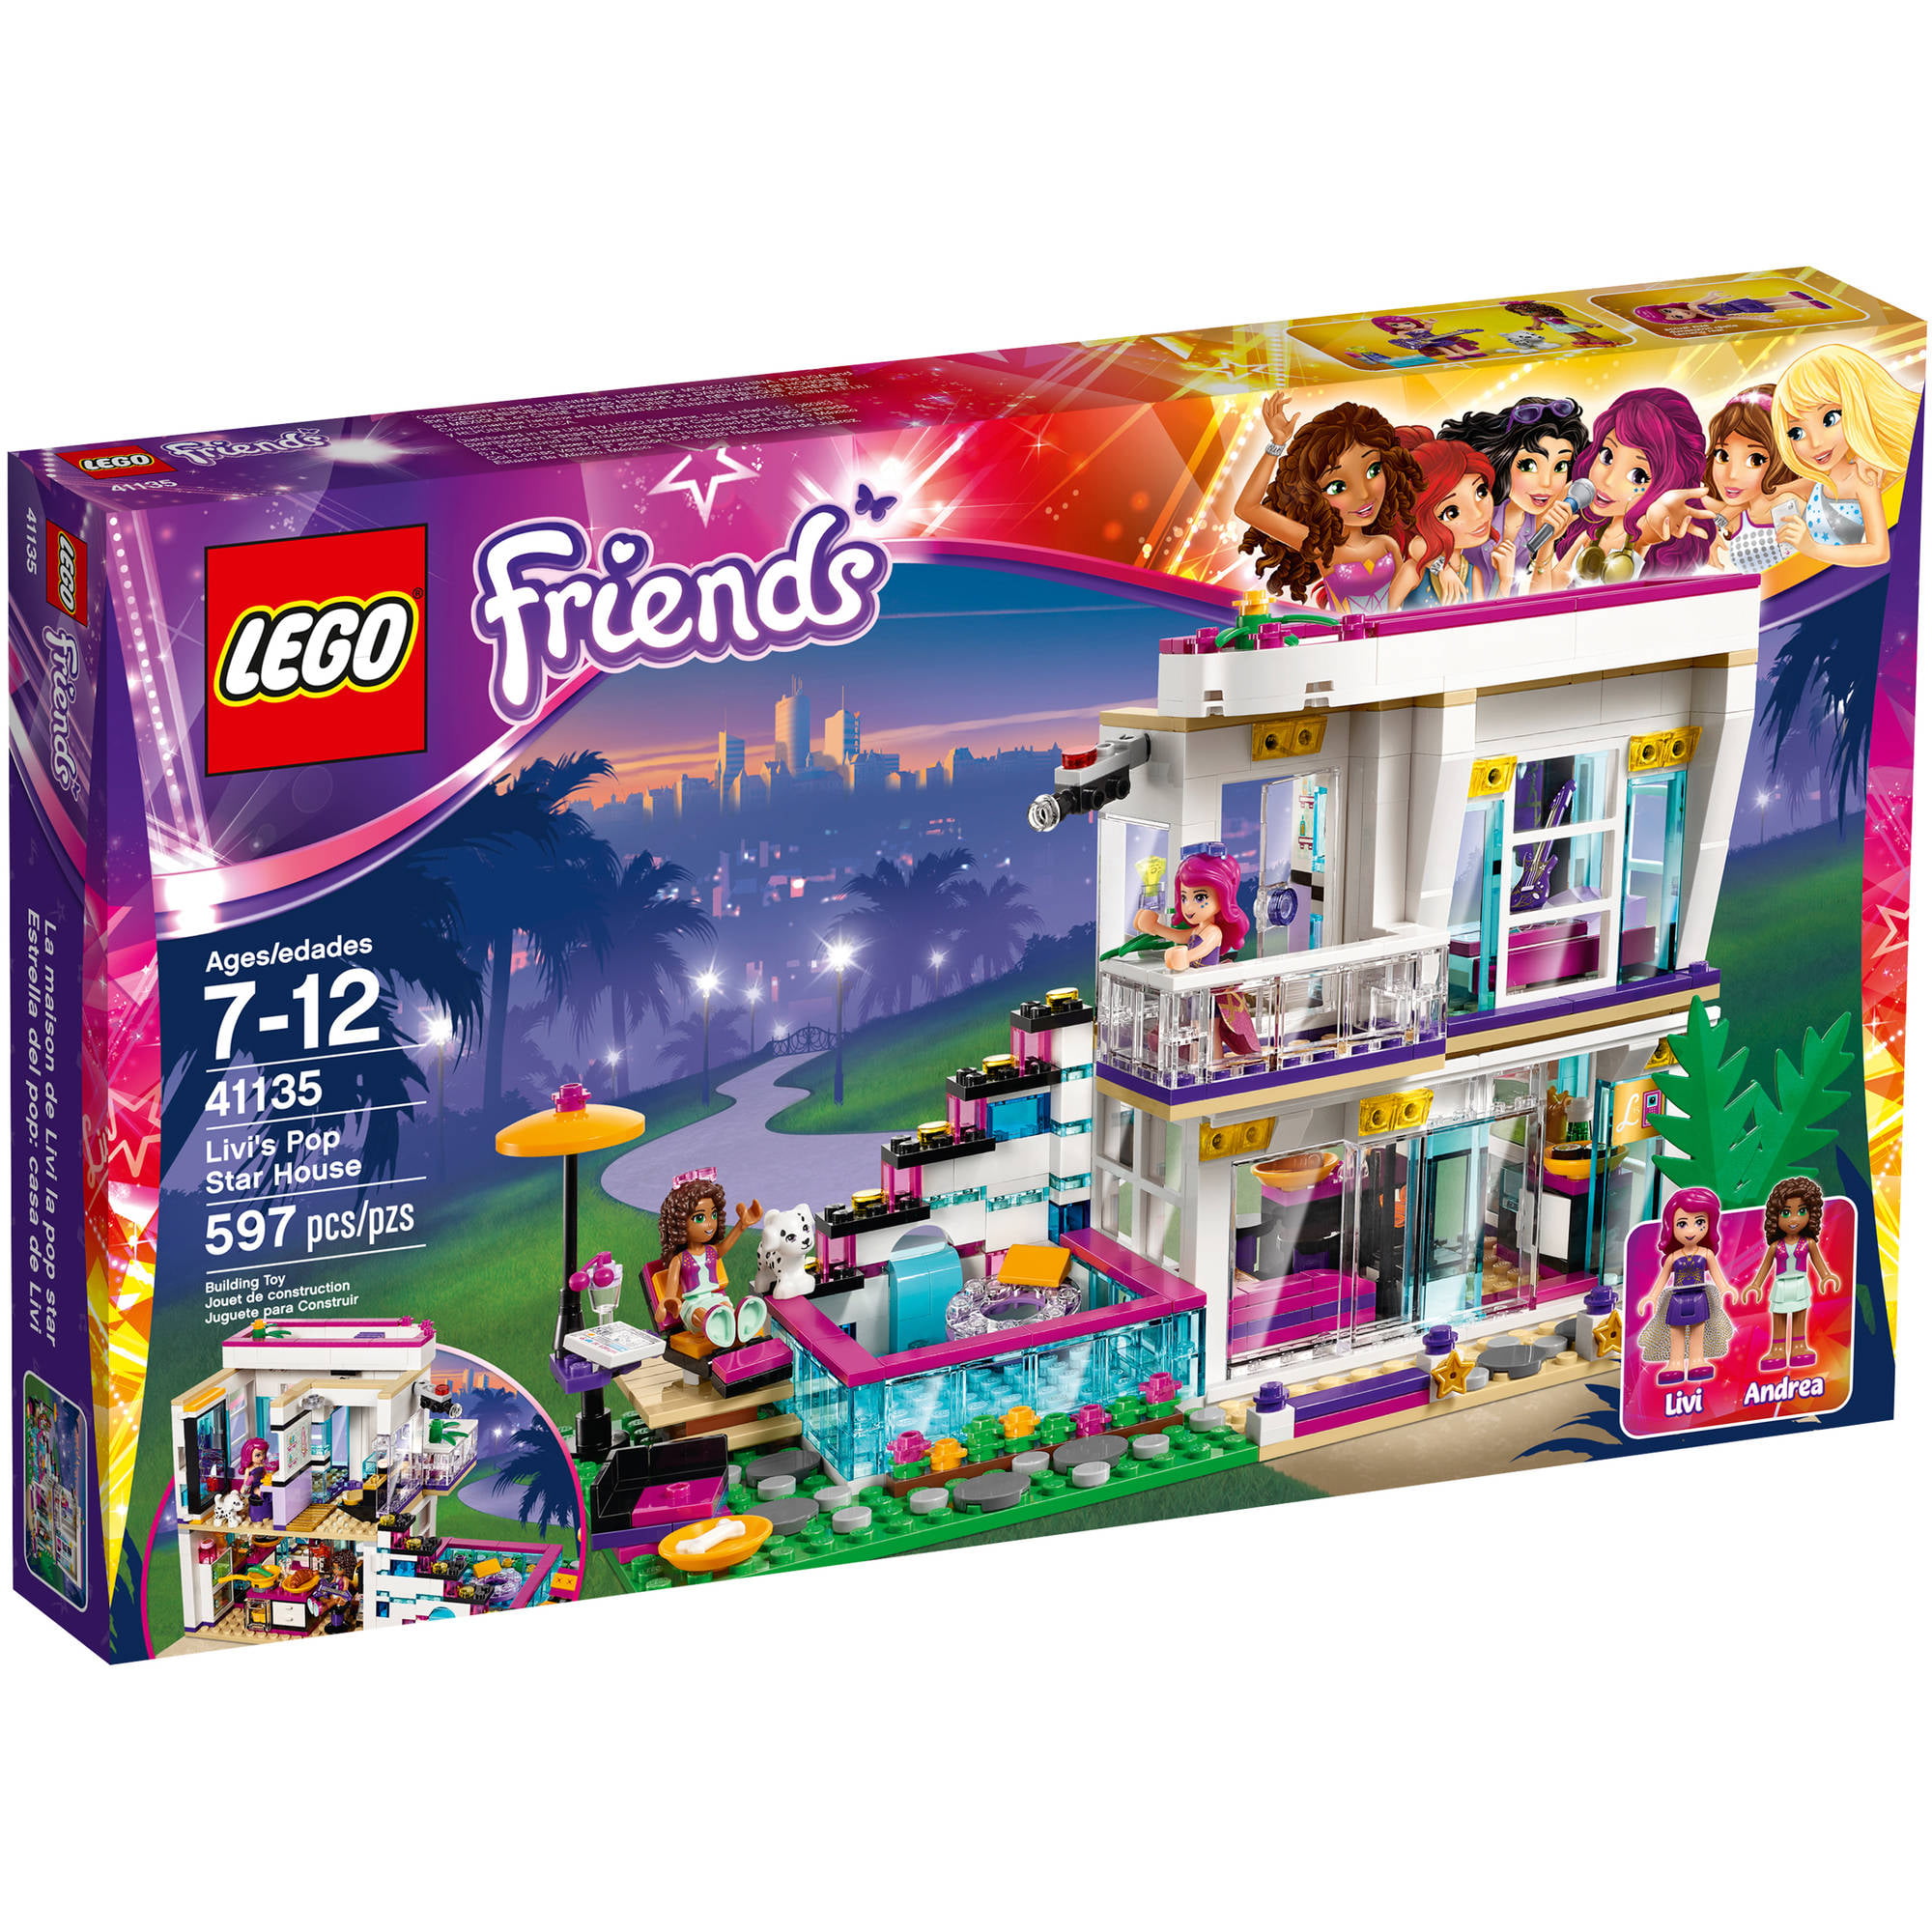 Jurassic Park At bygge Grudge LEGO Friends Livi\'s Pop Star House, 41135 - Walmart.com